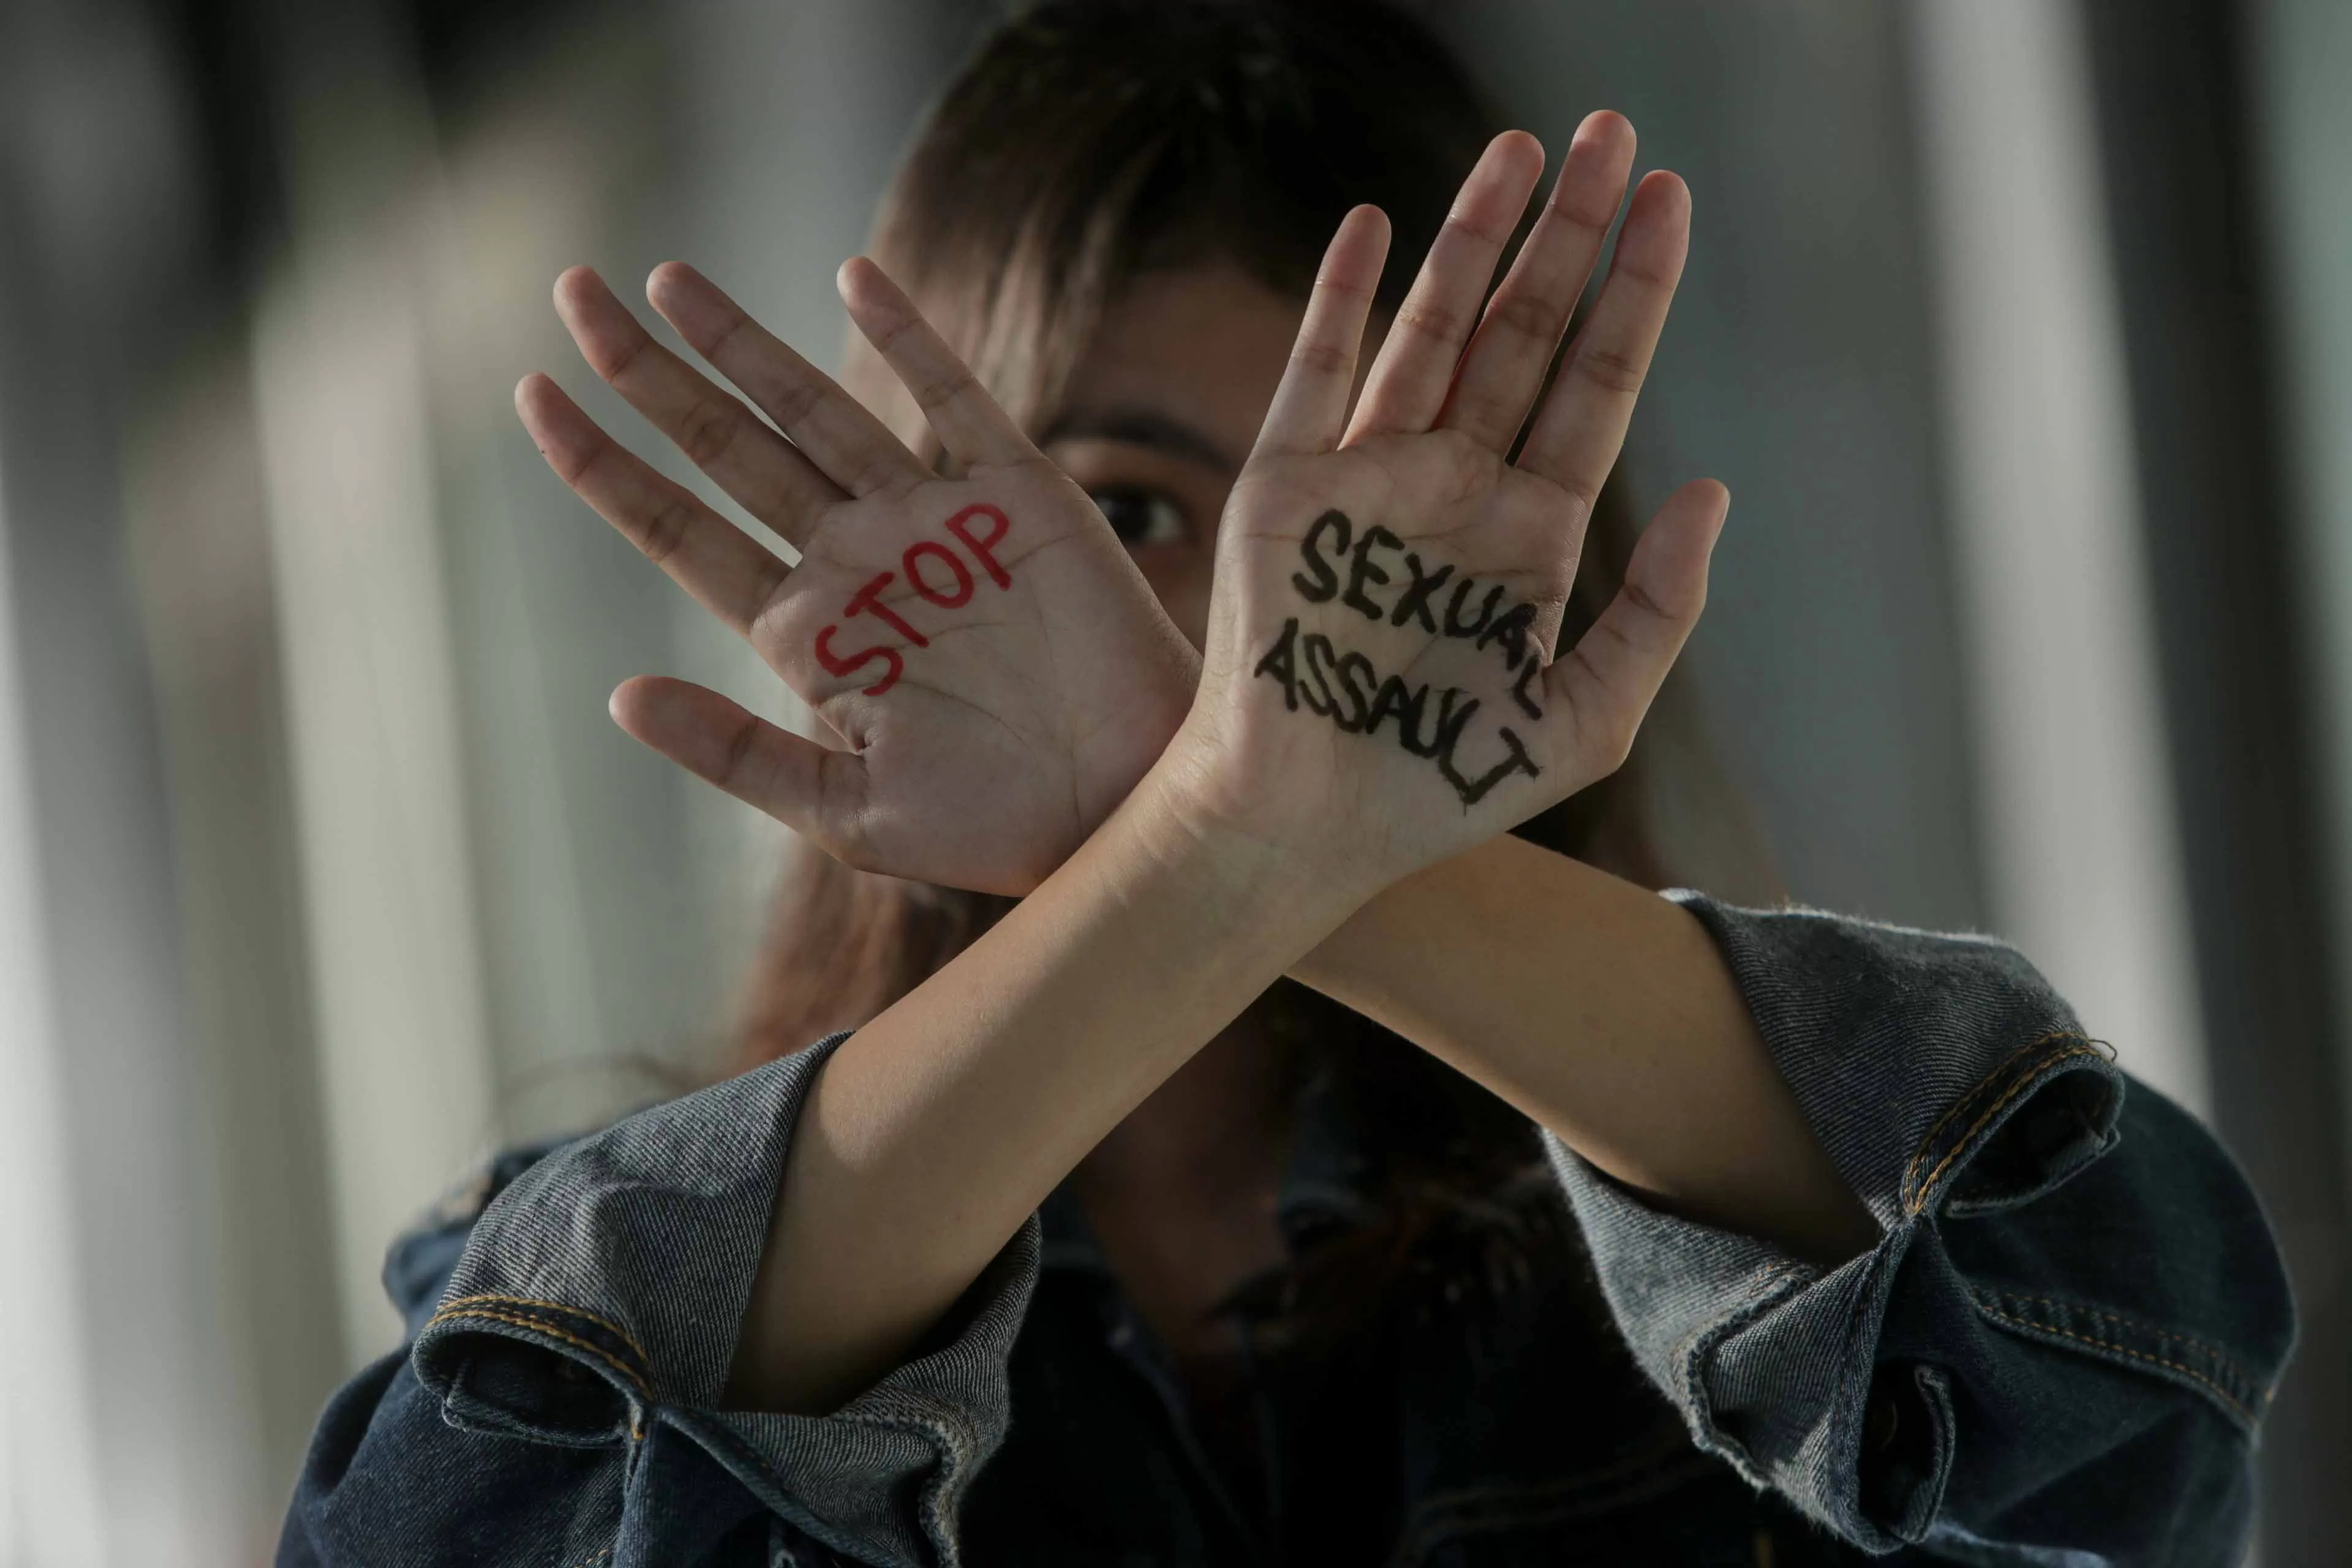 Menurut Kemenag, Bersiul dan Memandang Termasuk Kekerasan Seksual - Jawa Pos